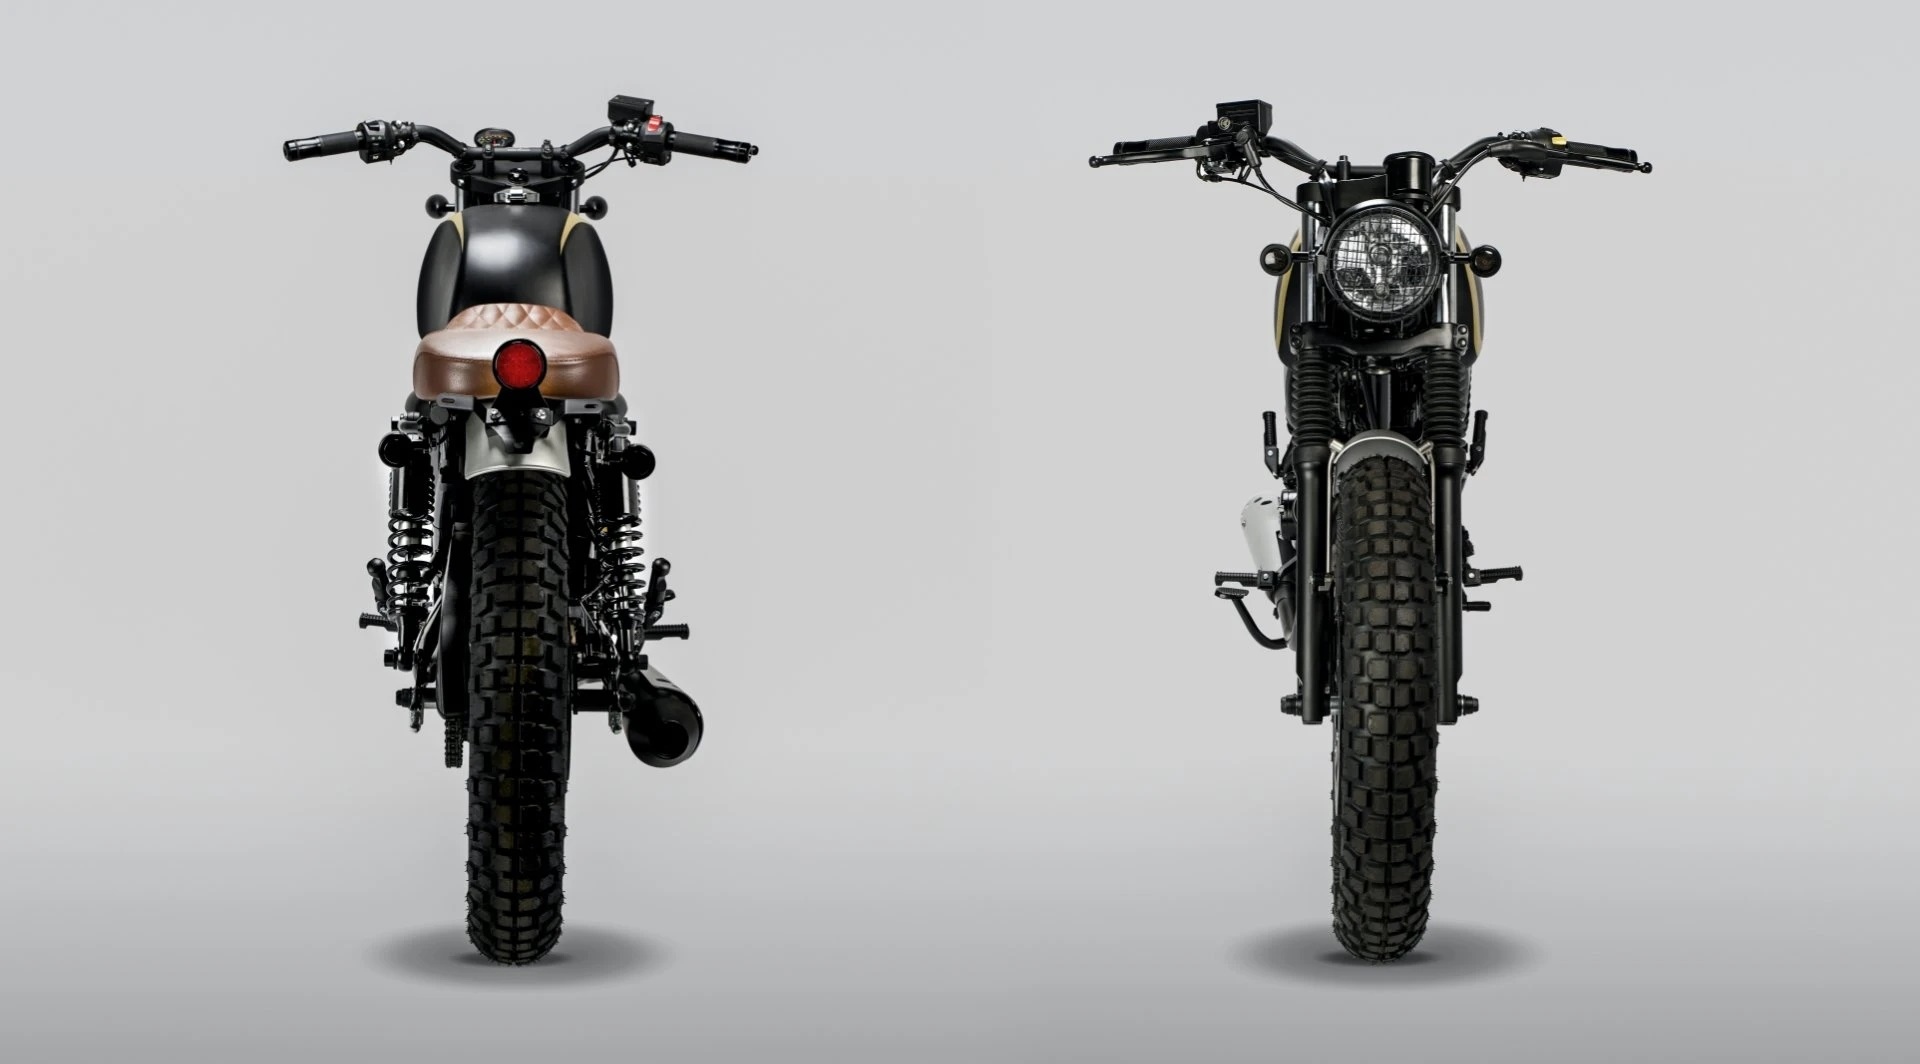 Mutt 125cc Motorcycles